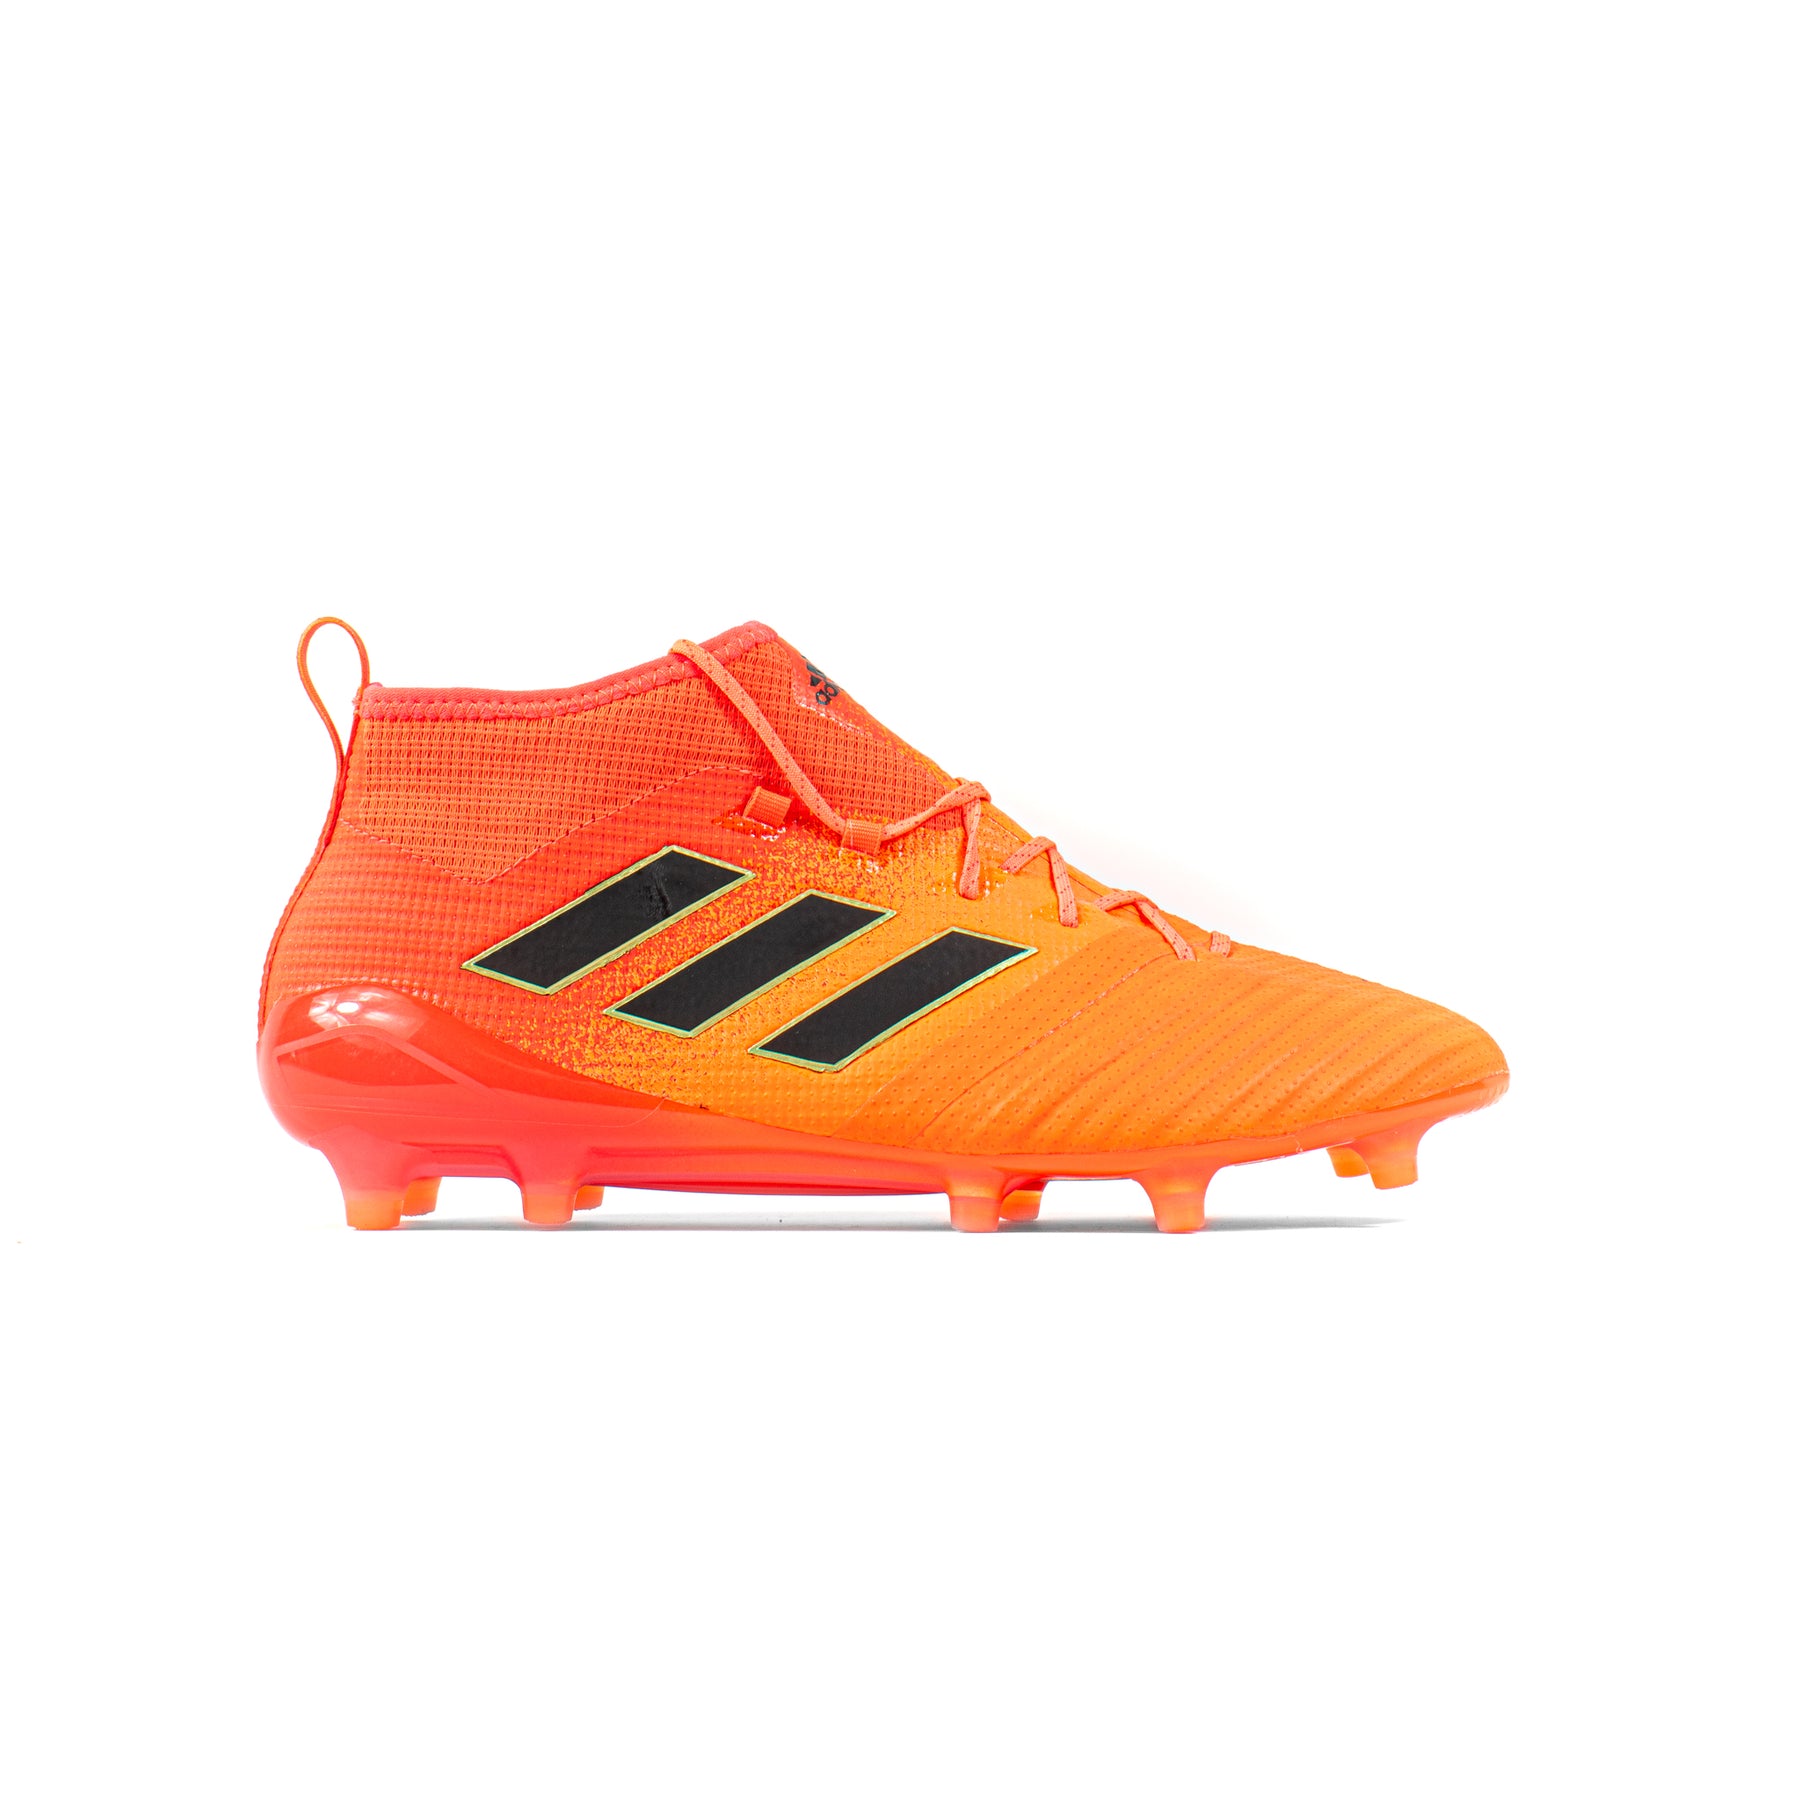 Adidas Ace 17.1 Orange FG – Classic Soccer